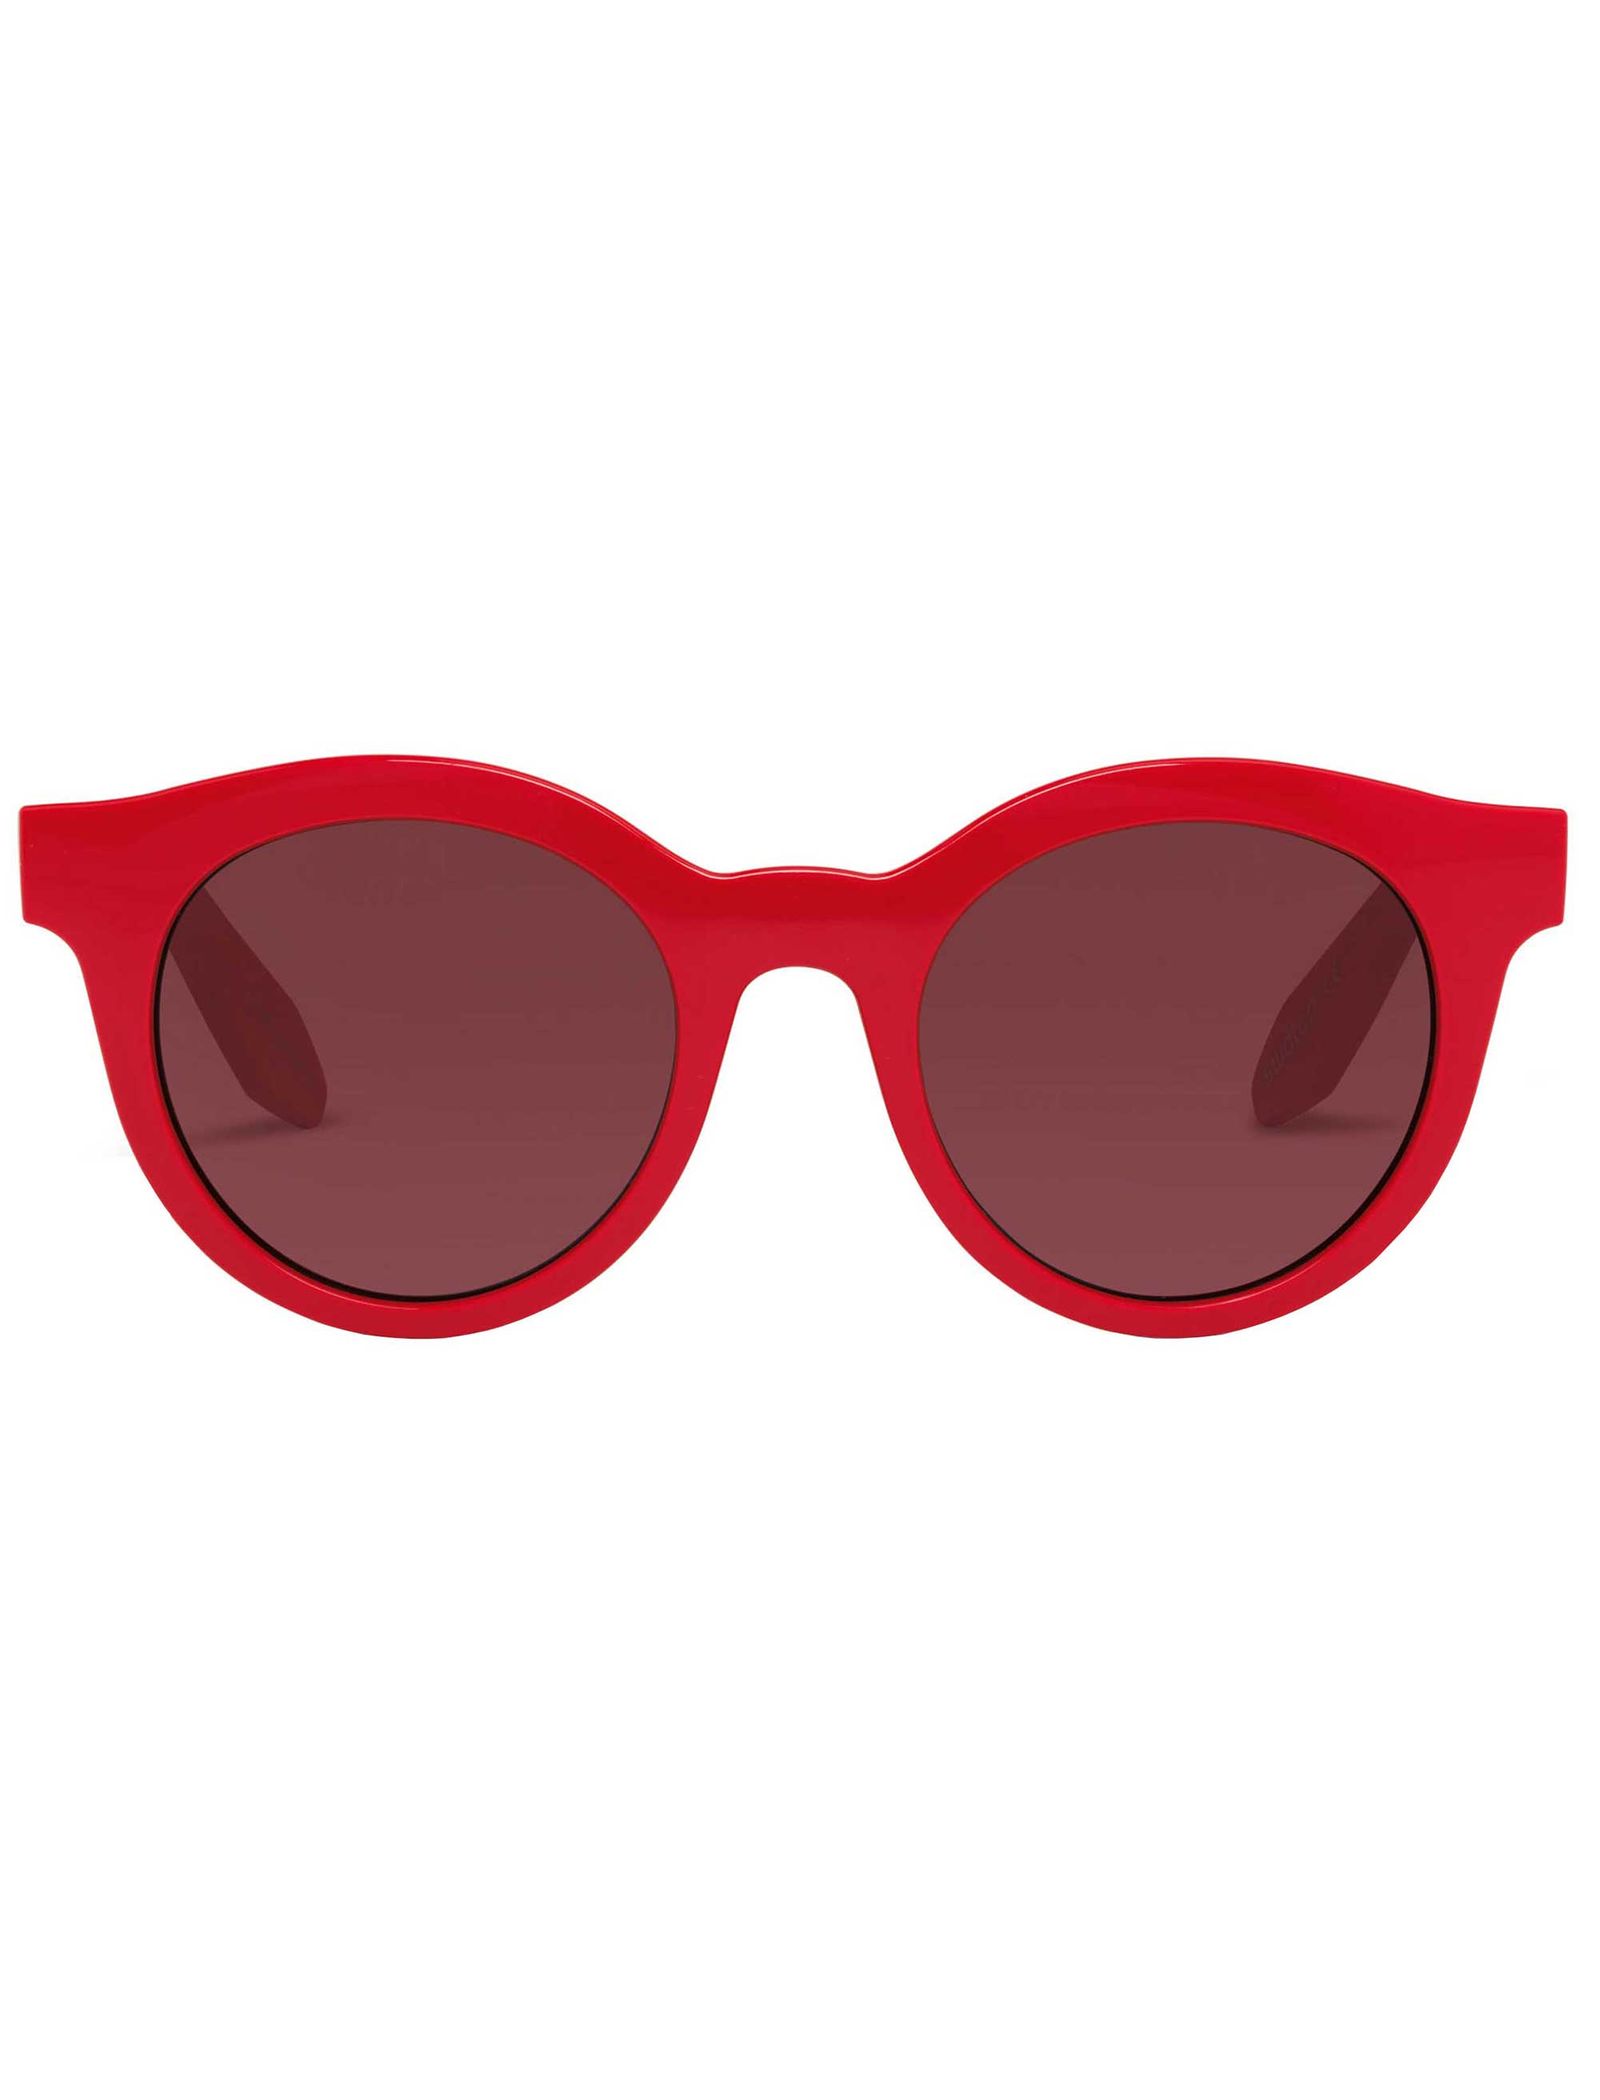 عینک آفتابی سواچ مدل SES01RMR034 - قرمز - 2